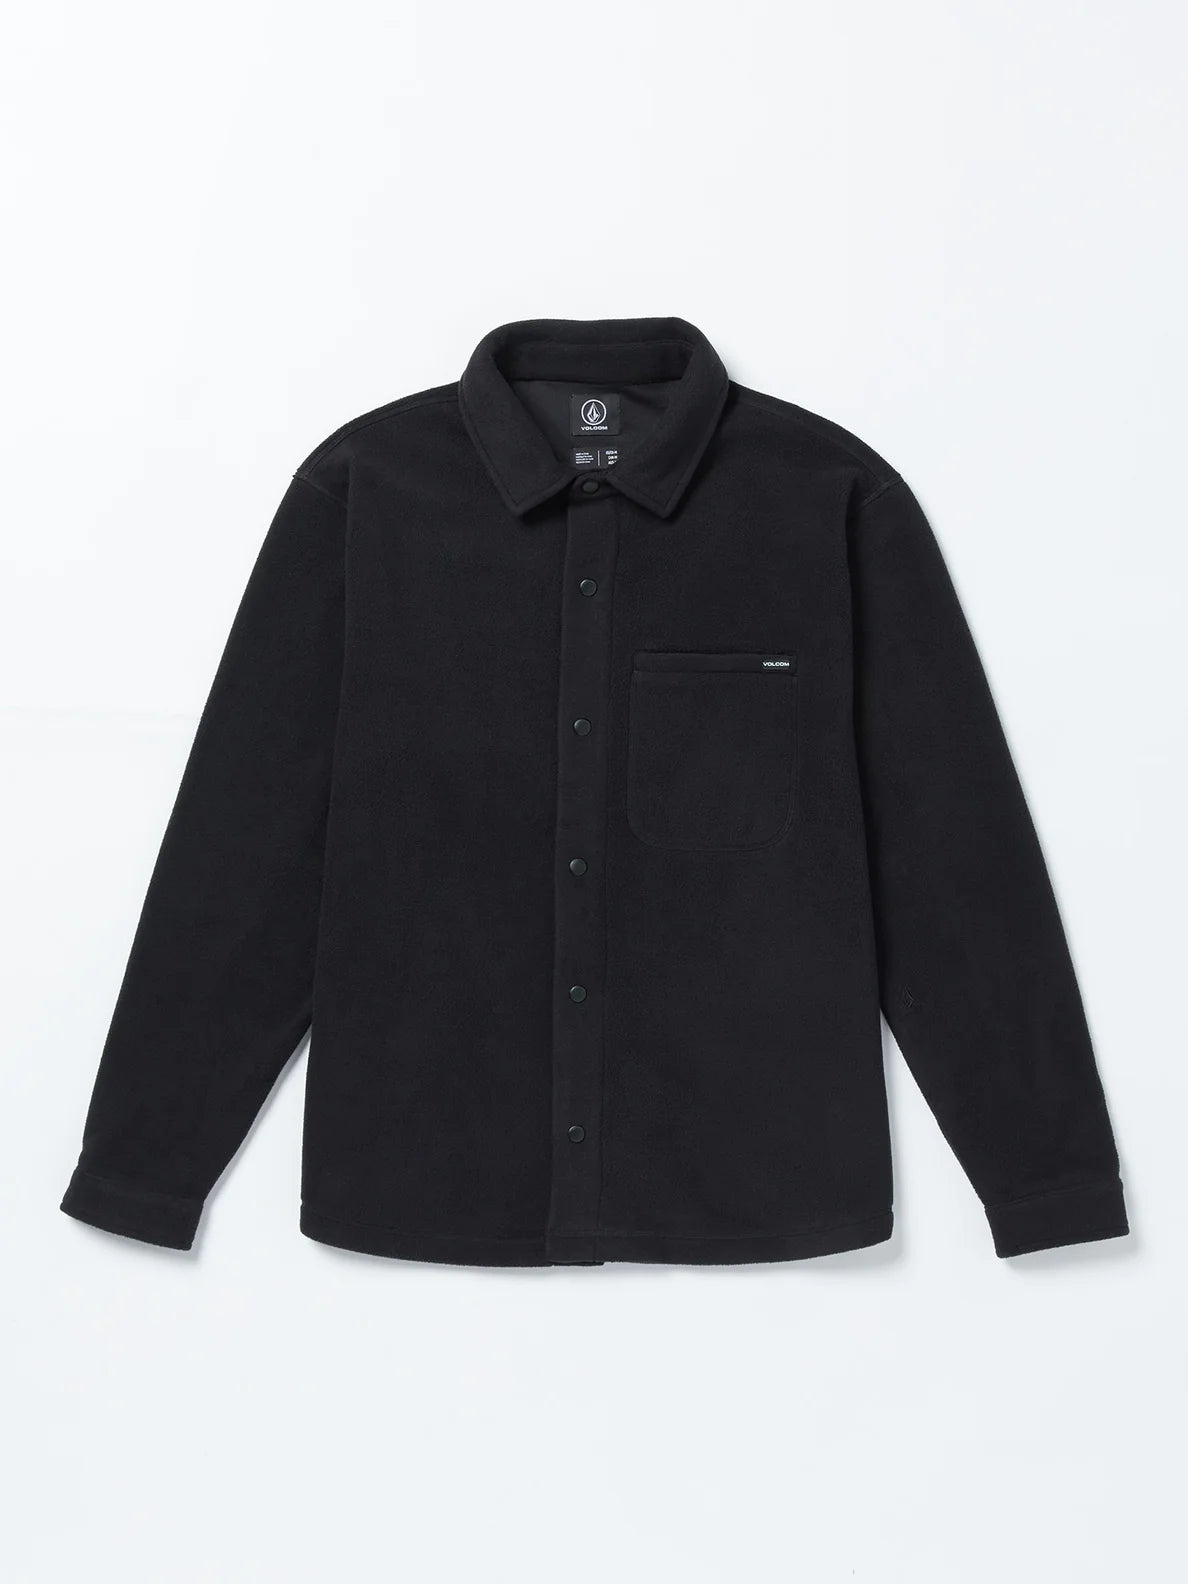 Volcom Bowered Light Long Sleeve Shirt - Black